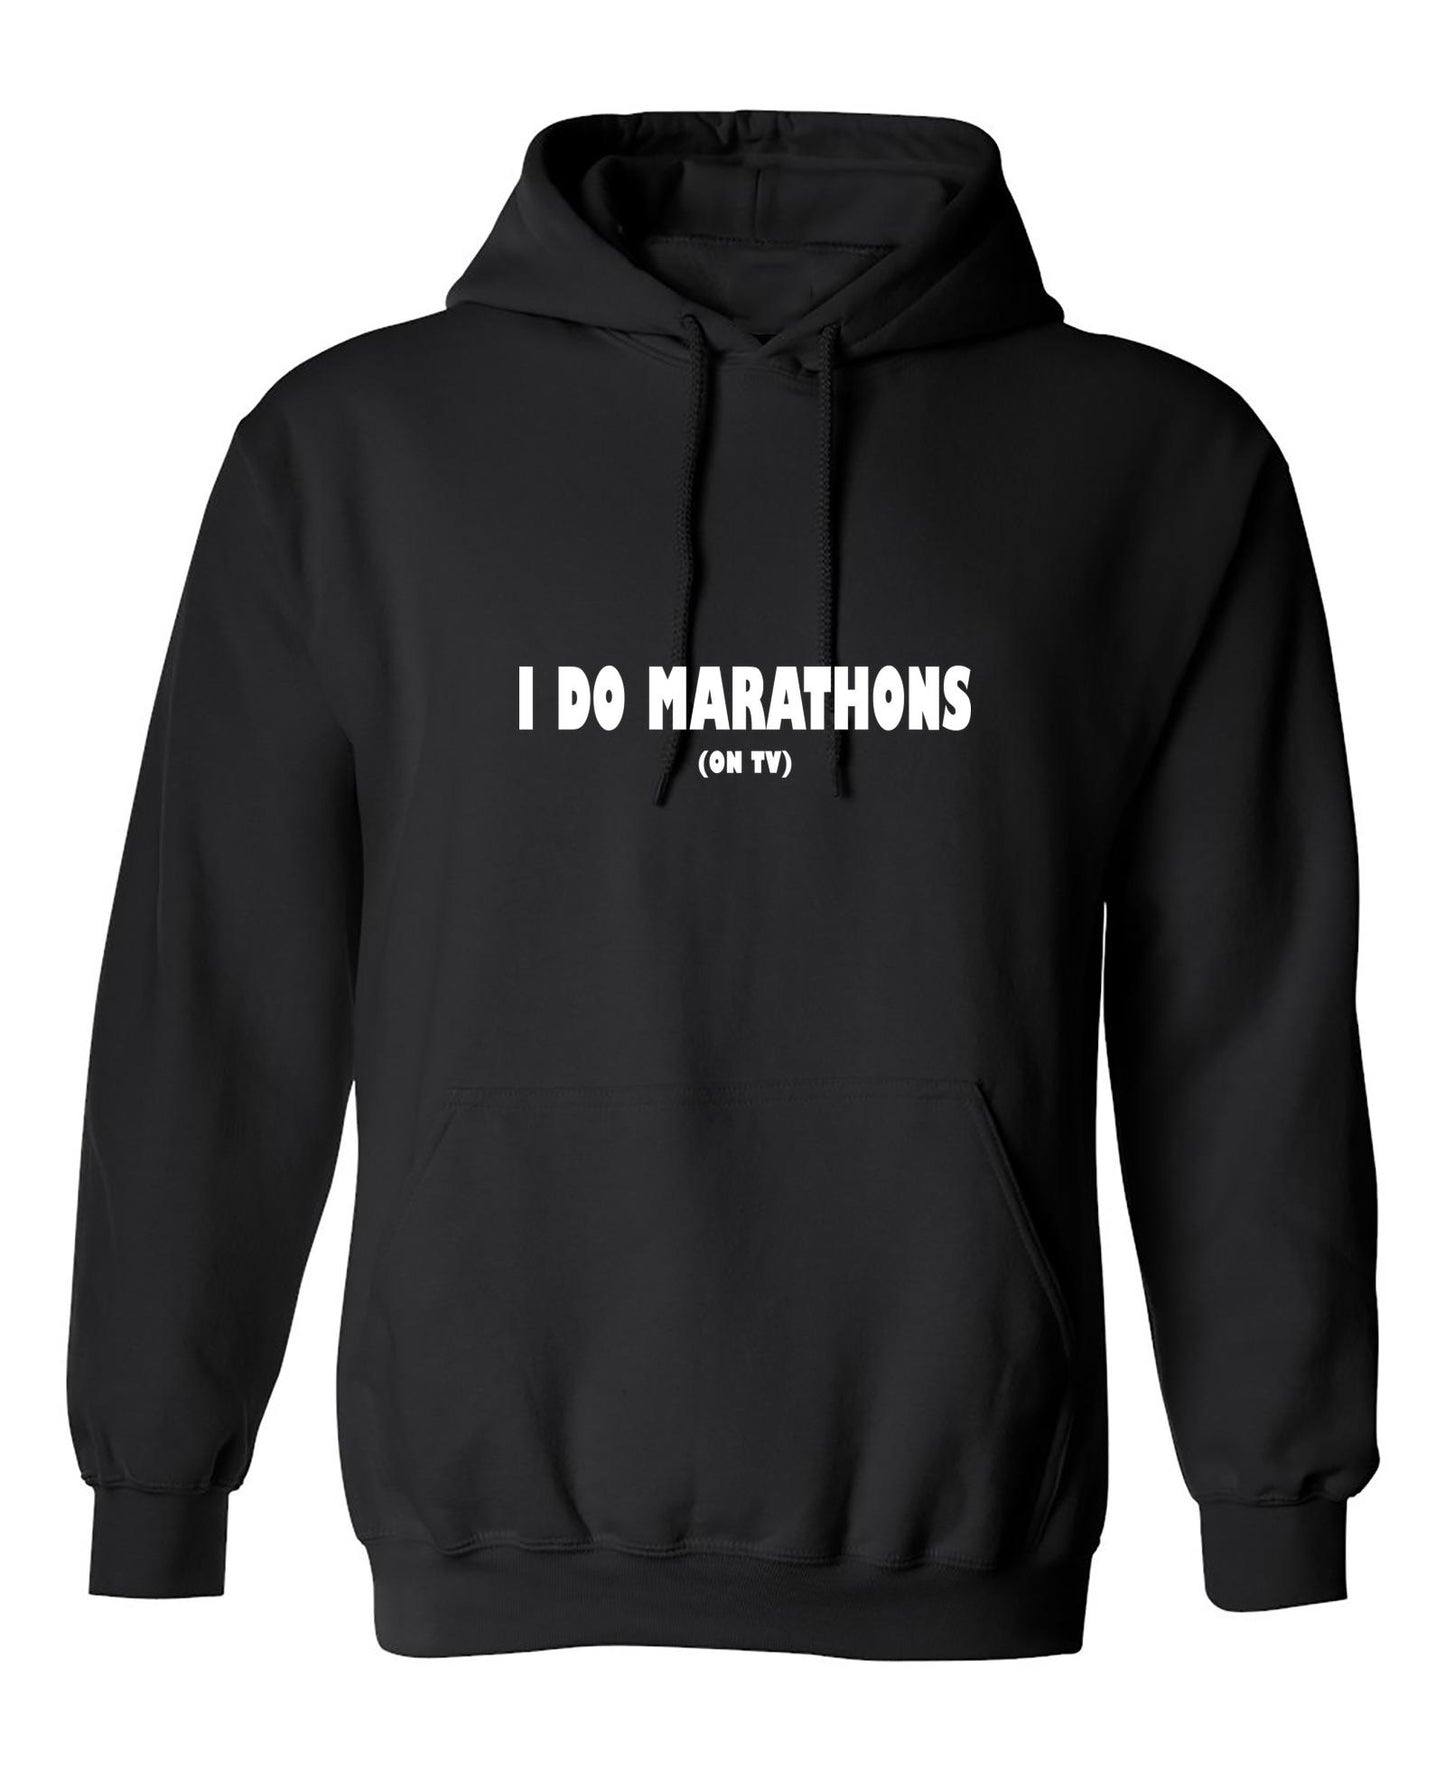 Funny T-Shirts design "I Do Marathons On TV"